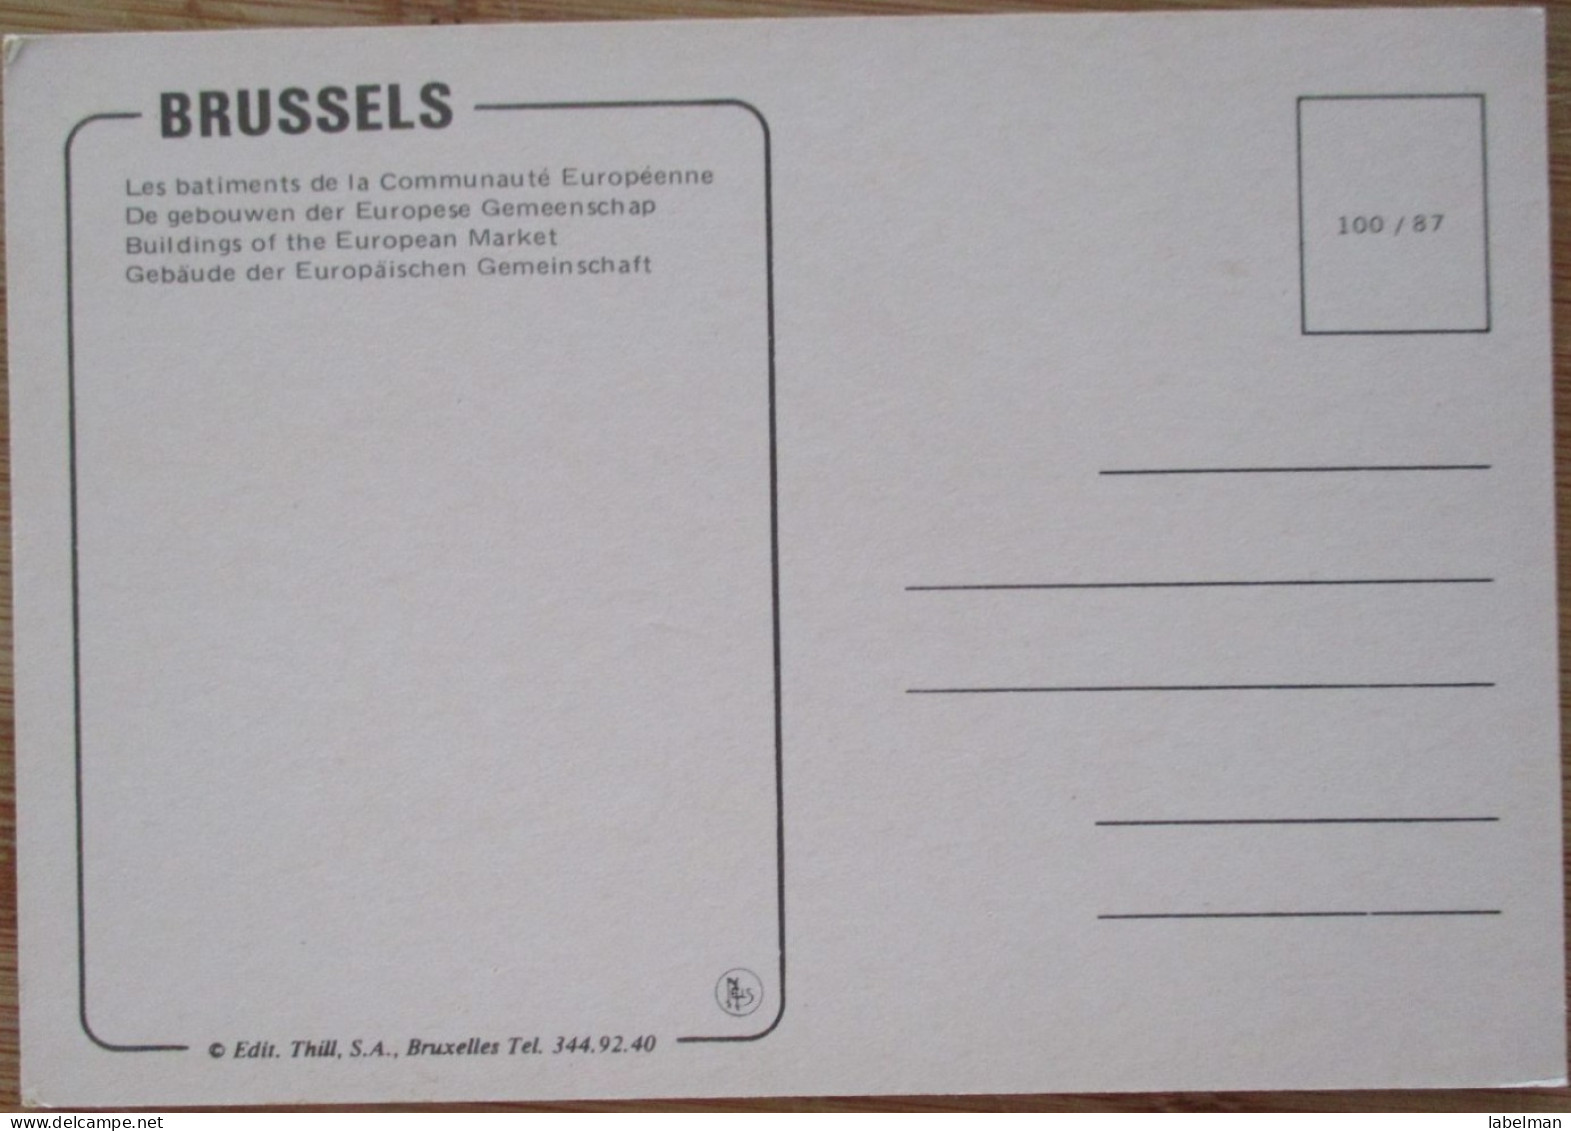 BELGIUM BRUXELLES BRUSSEL EUROPEAN MARKET CENTER KARTE CARD CARTE POSTALE ANSICHTSKARTE POSTKARTE POSTCARD CARTOLINA - Brussels By Night